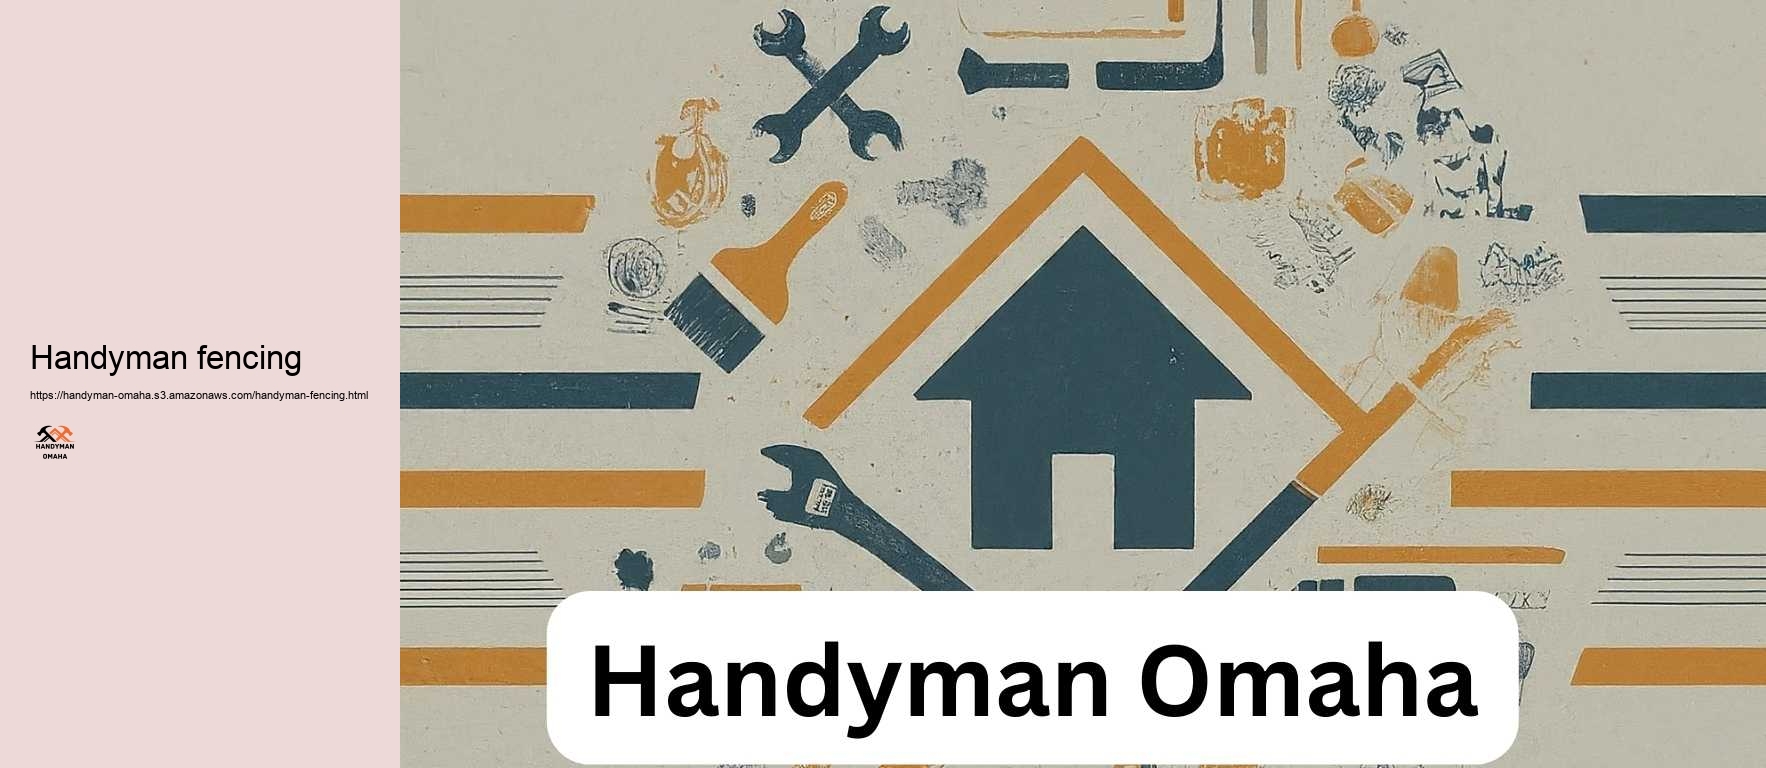 Handyman fencing